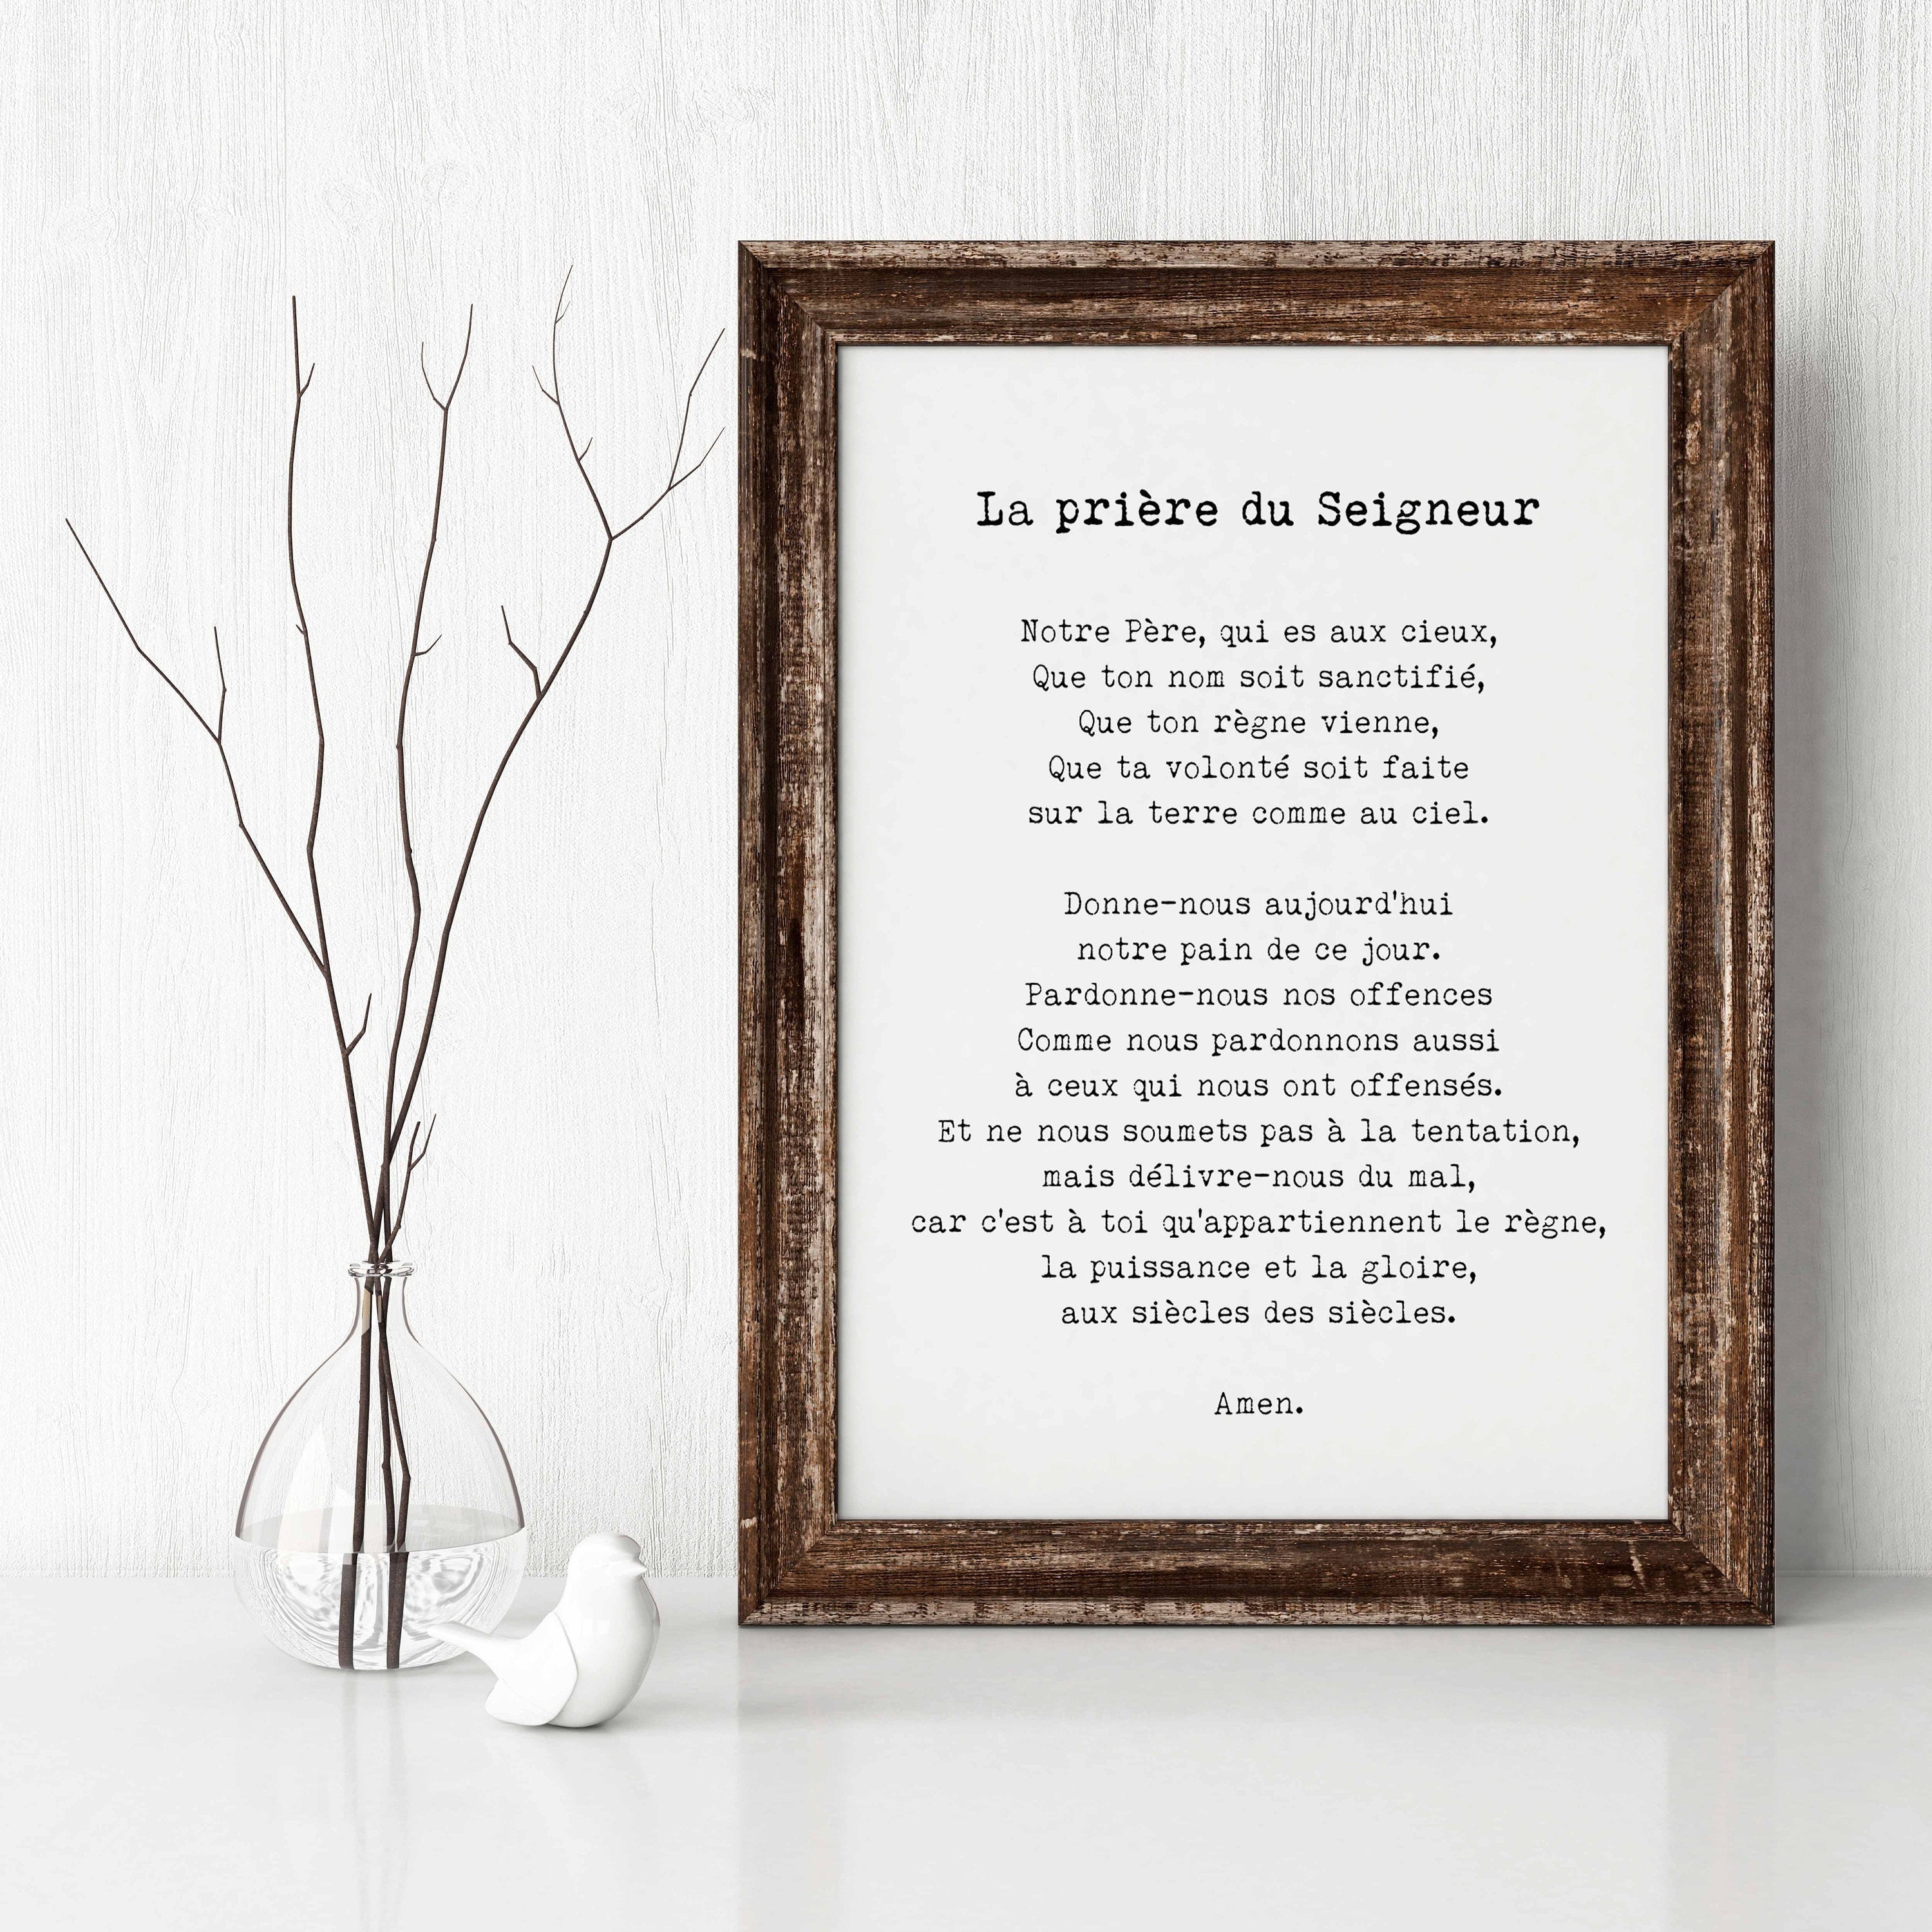 French LORD's Prayer Print, Prière du Seigneur